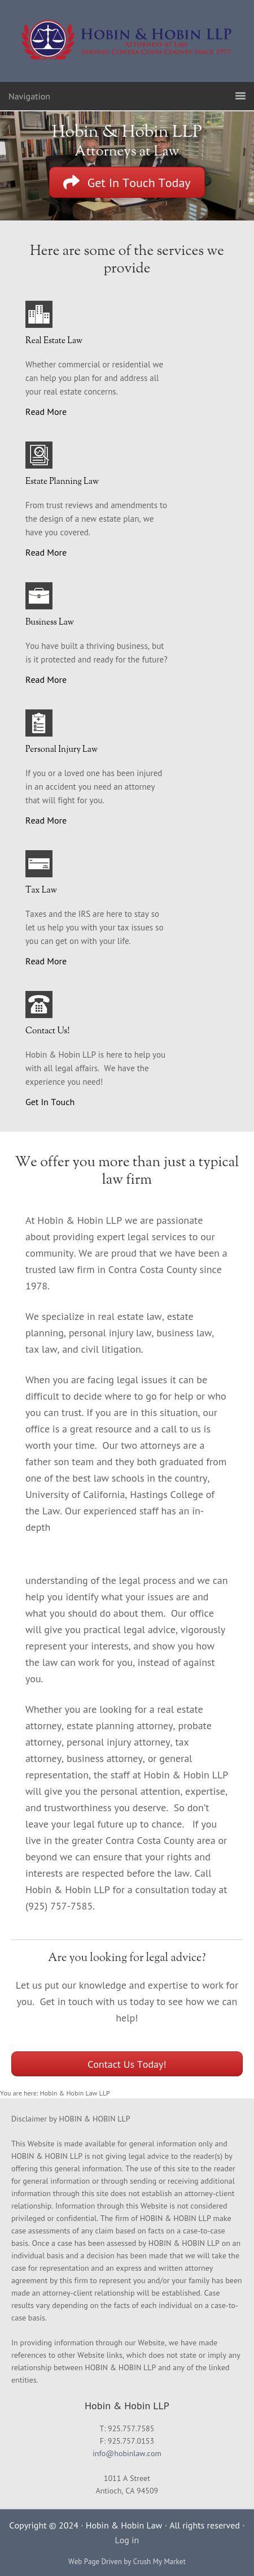 Hobin & Hobin LLP Attorneys at Law - Antioch CA Lawyers